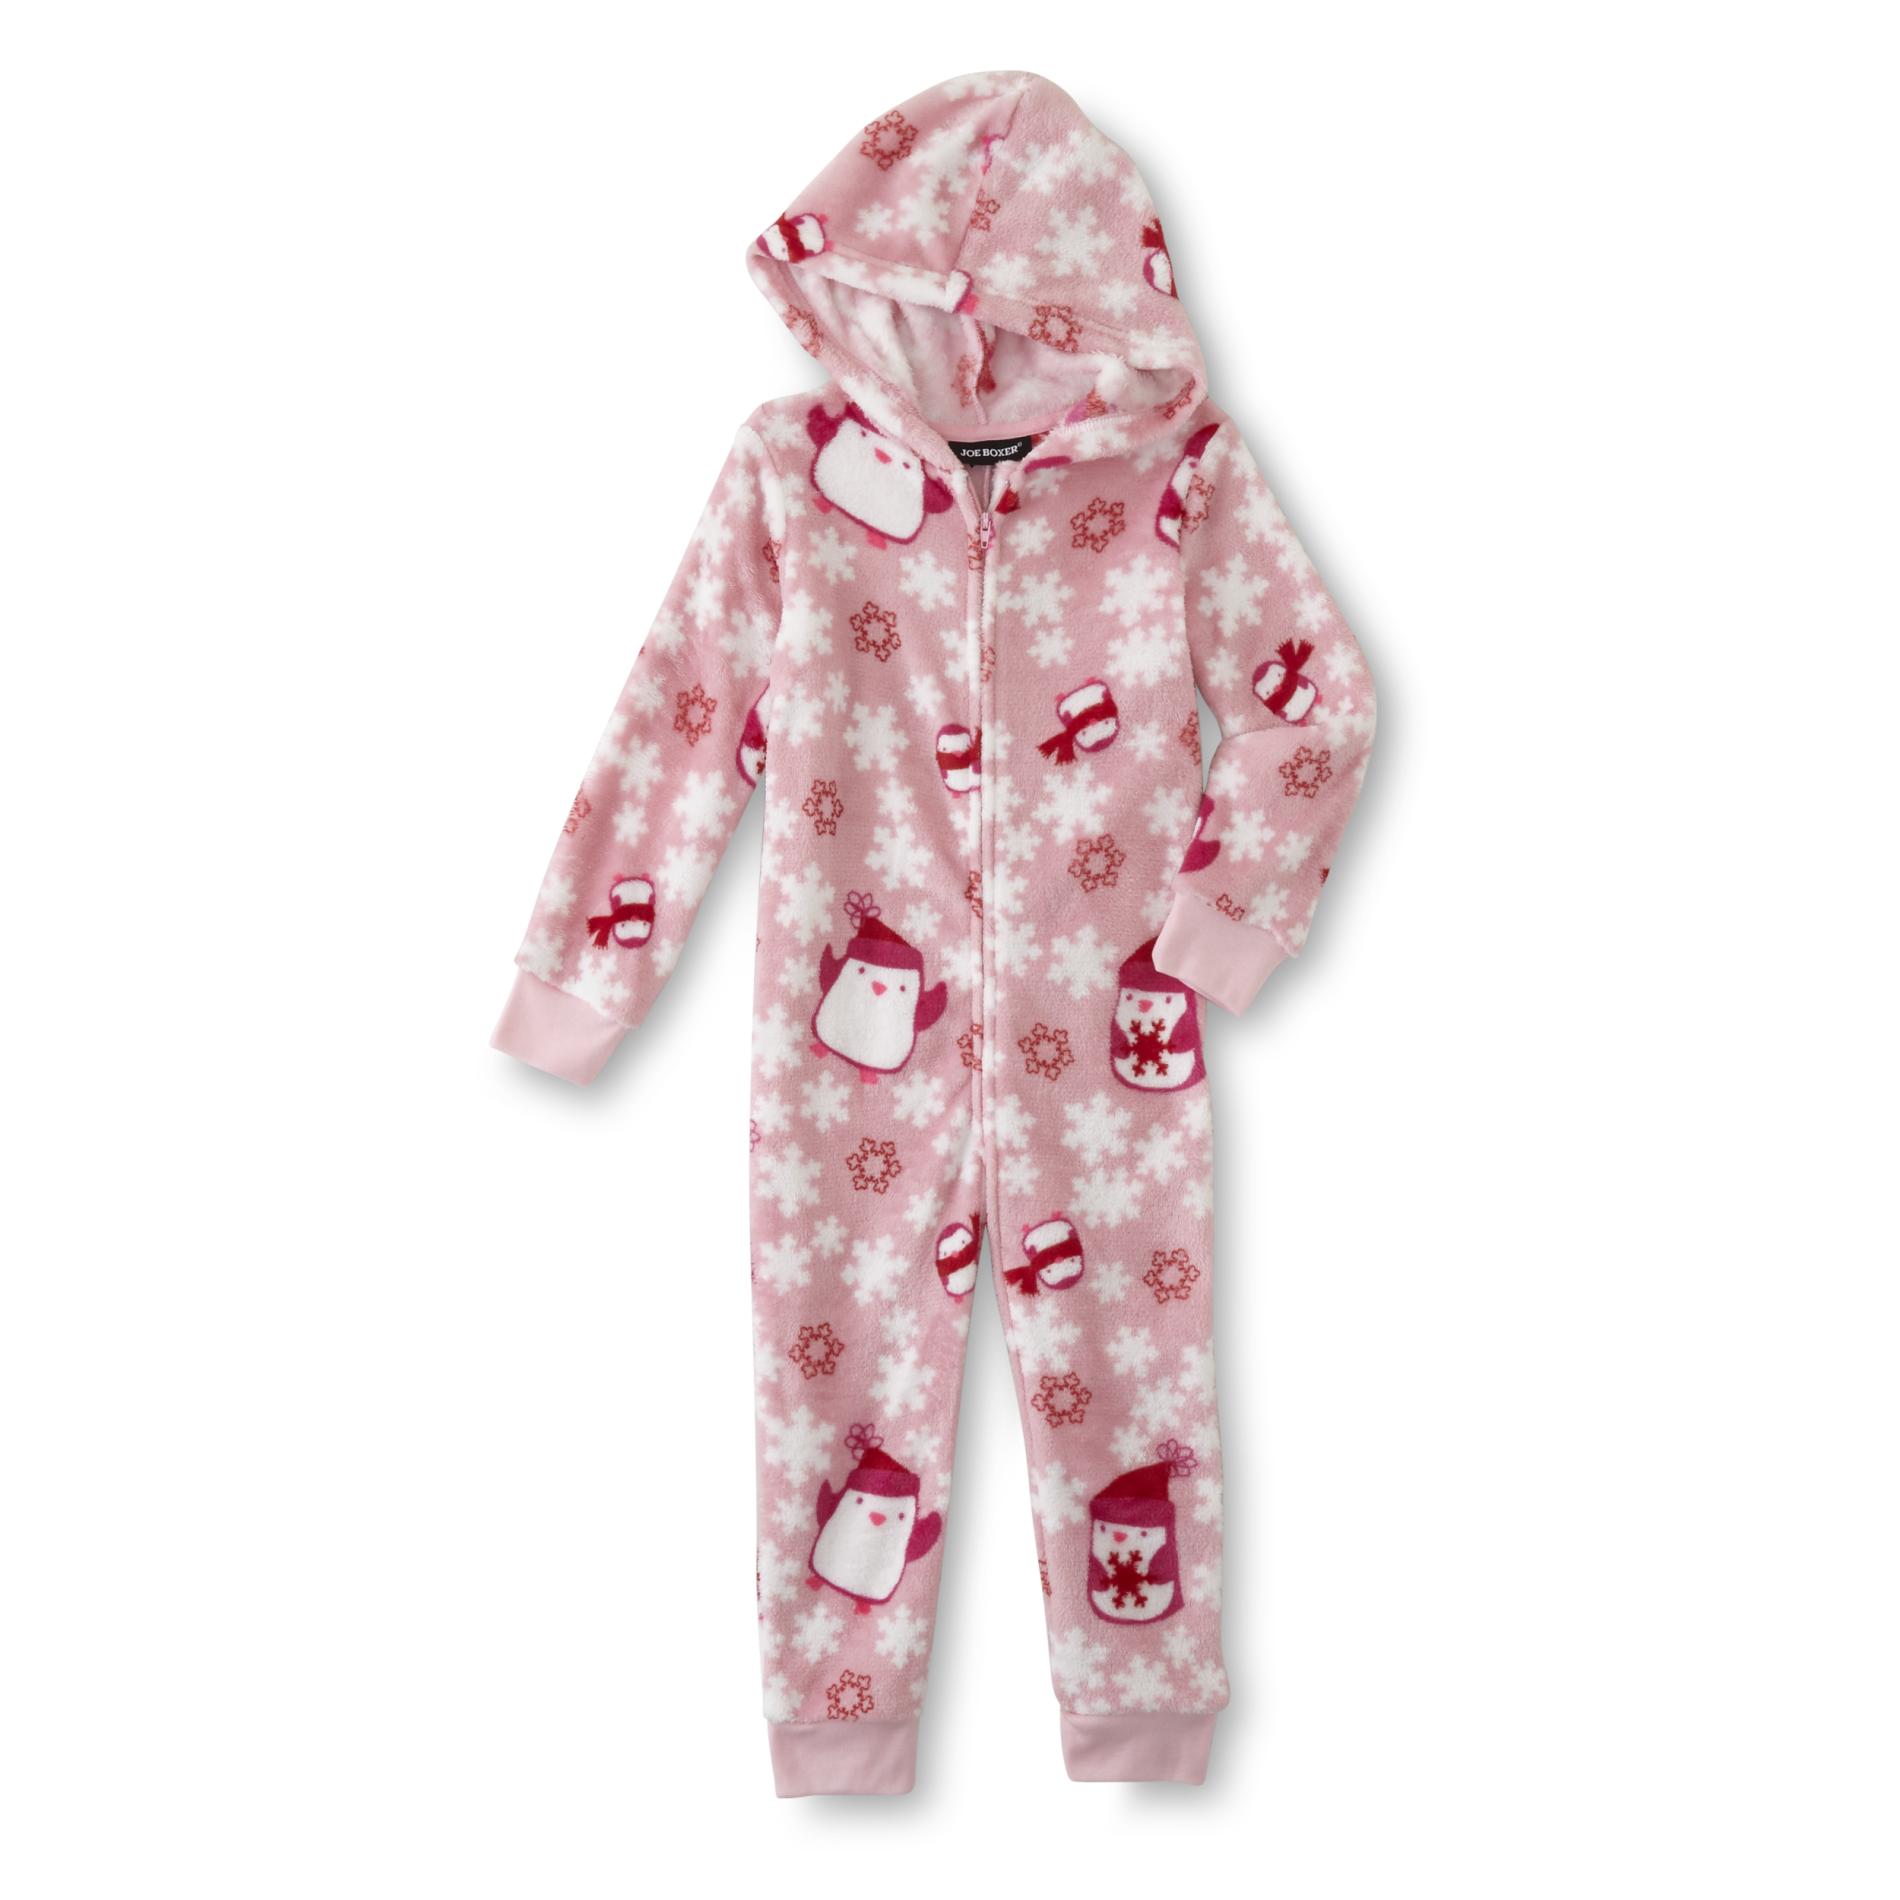 Joe Boxer Infant & Toddler Girls' Hooded Sleeper Pajamas - Penguins